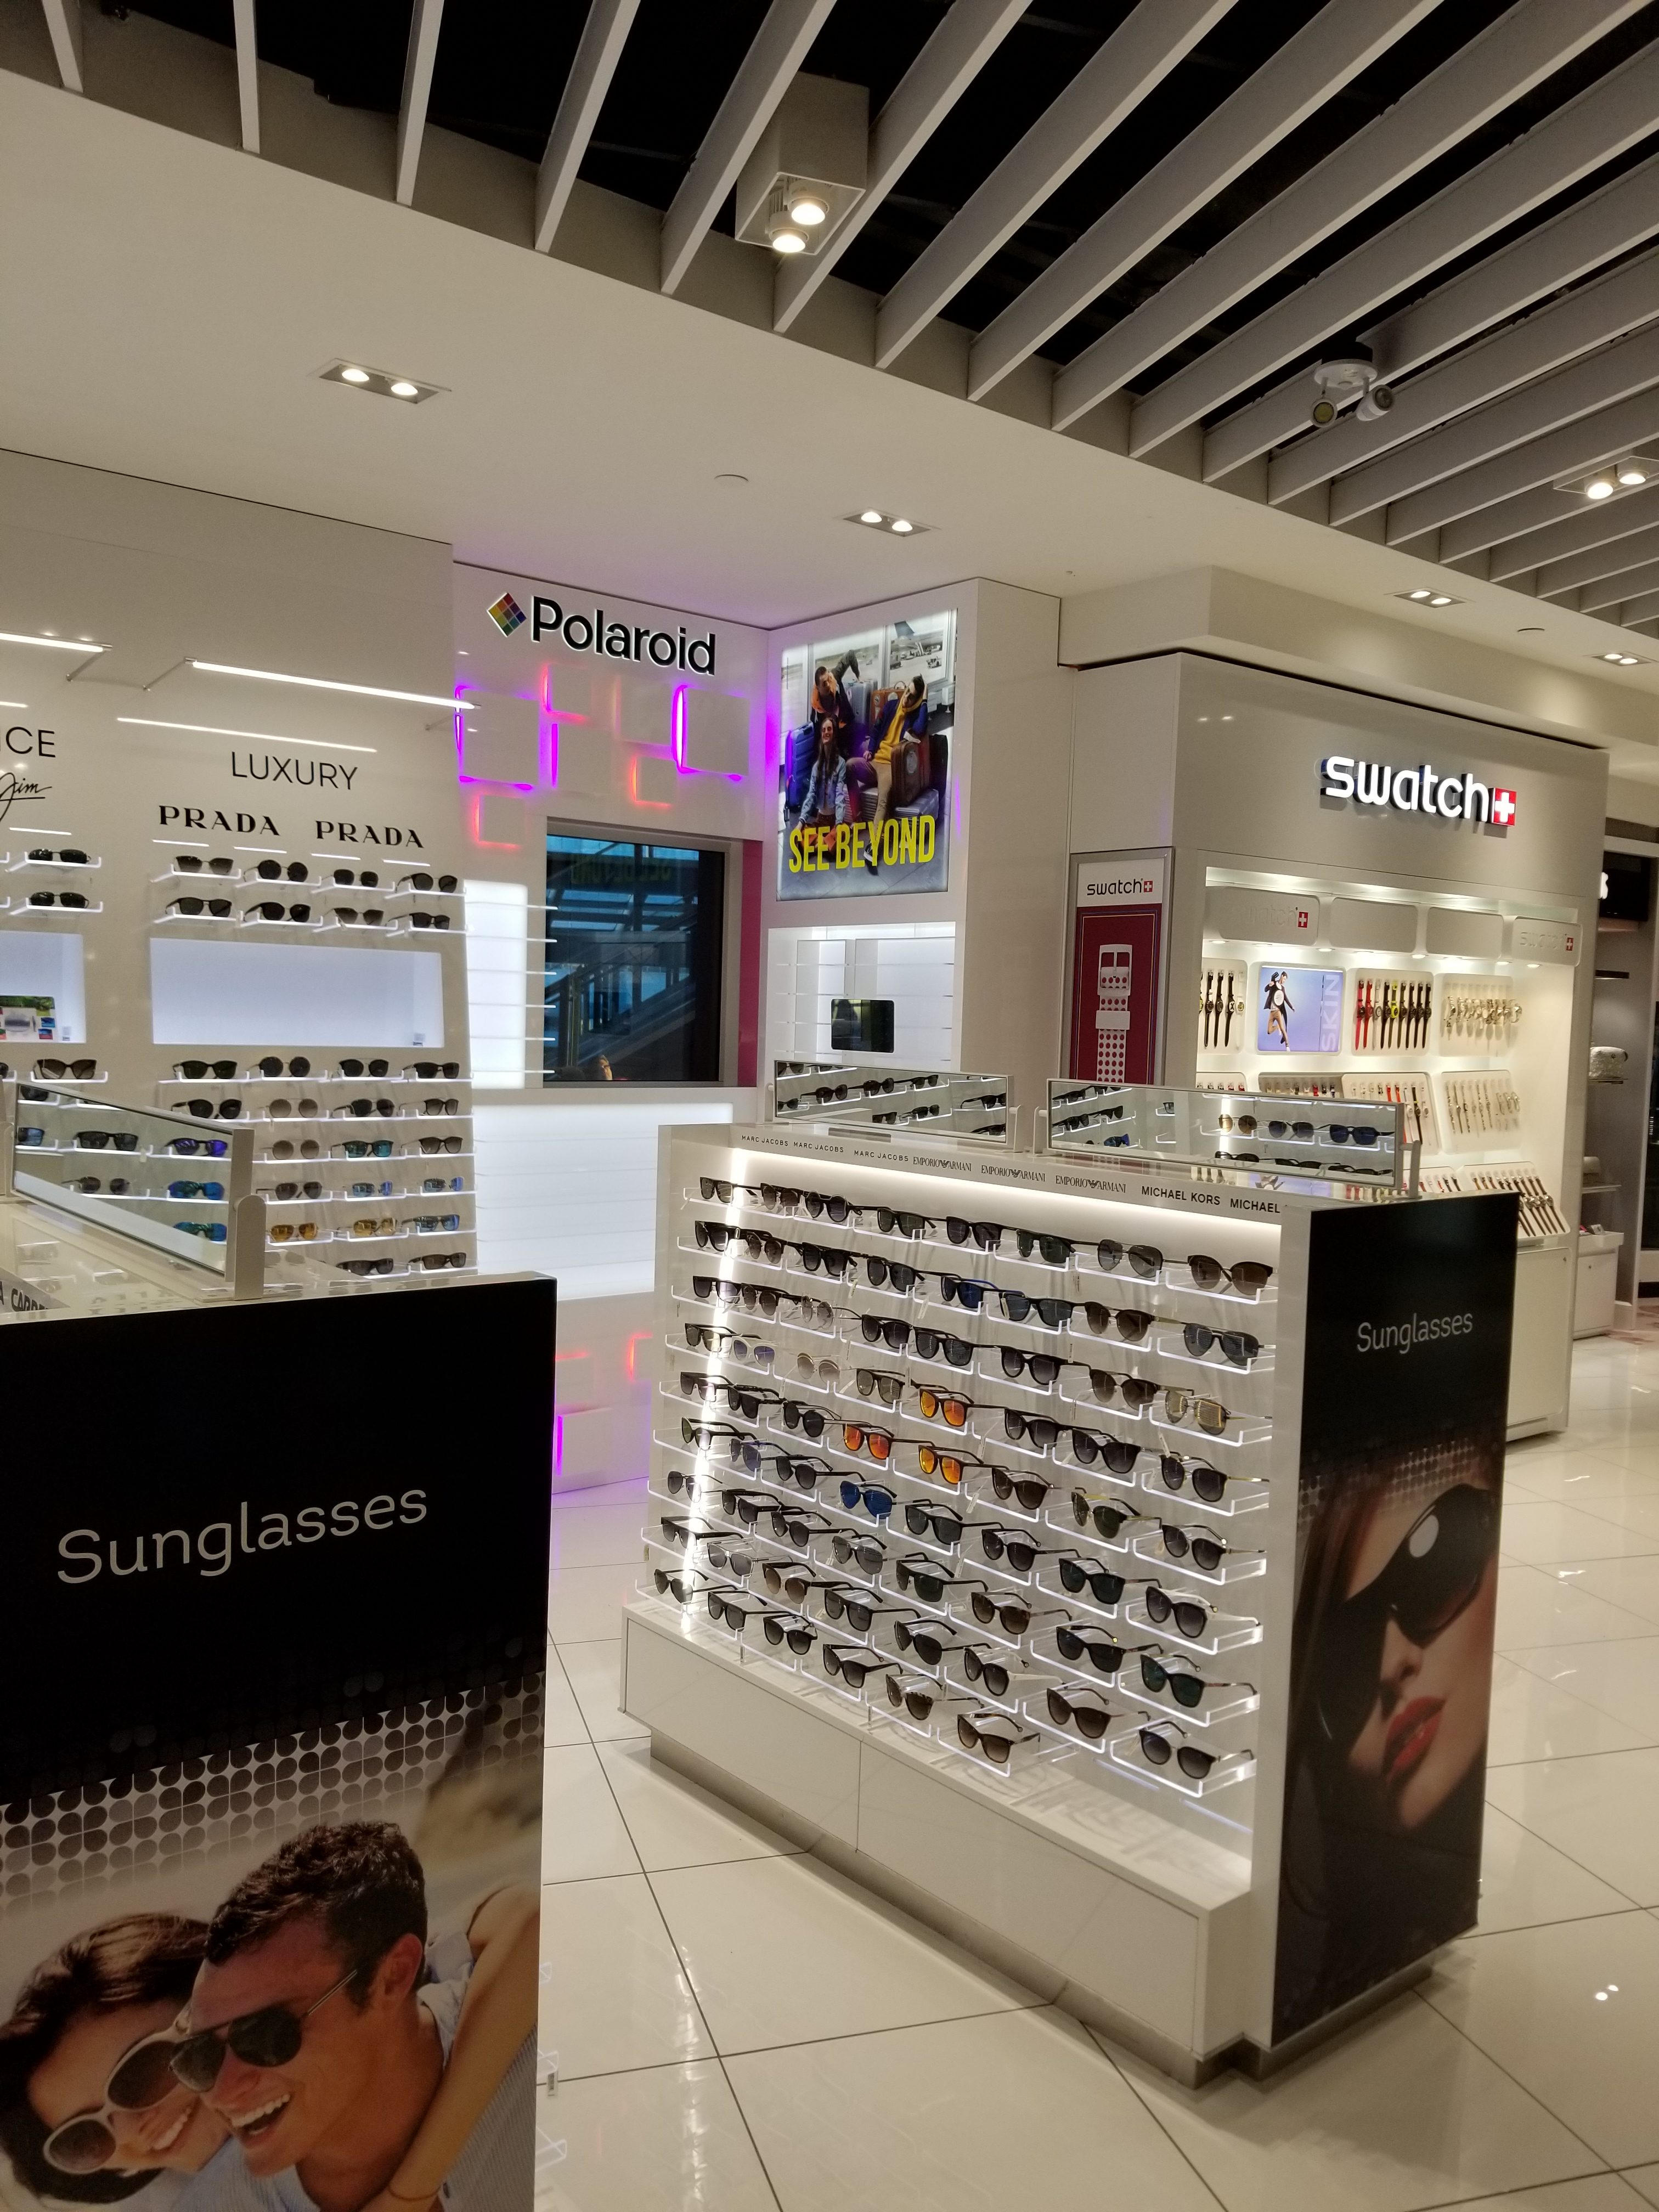 Polaroid - Sunglasses Fixture